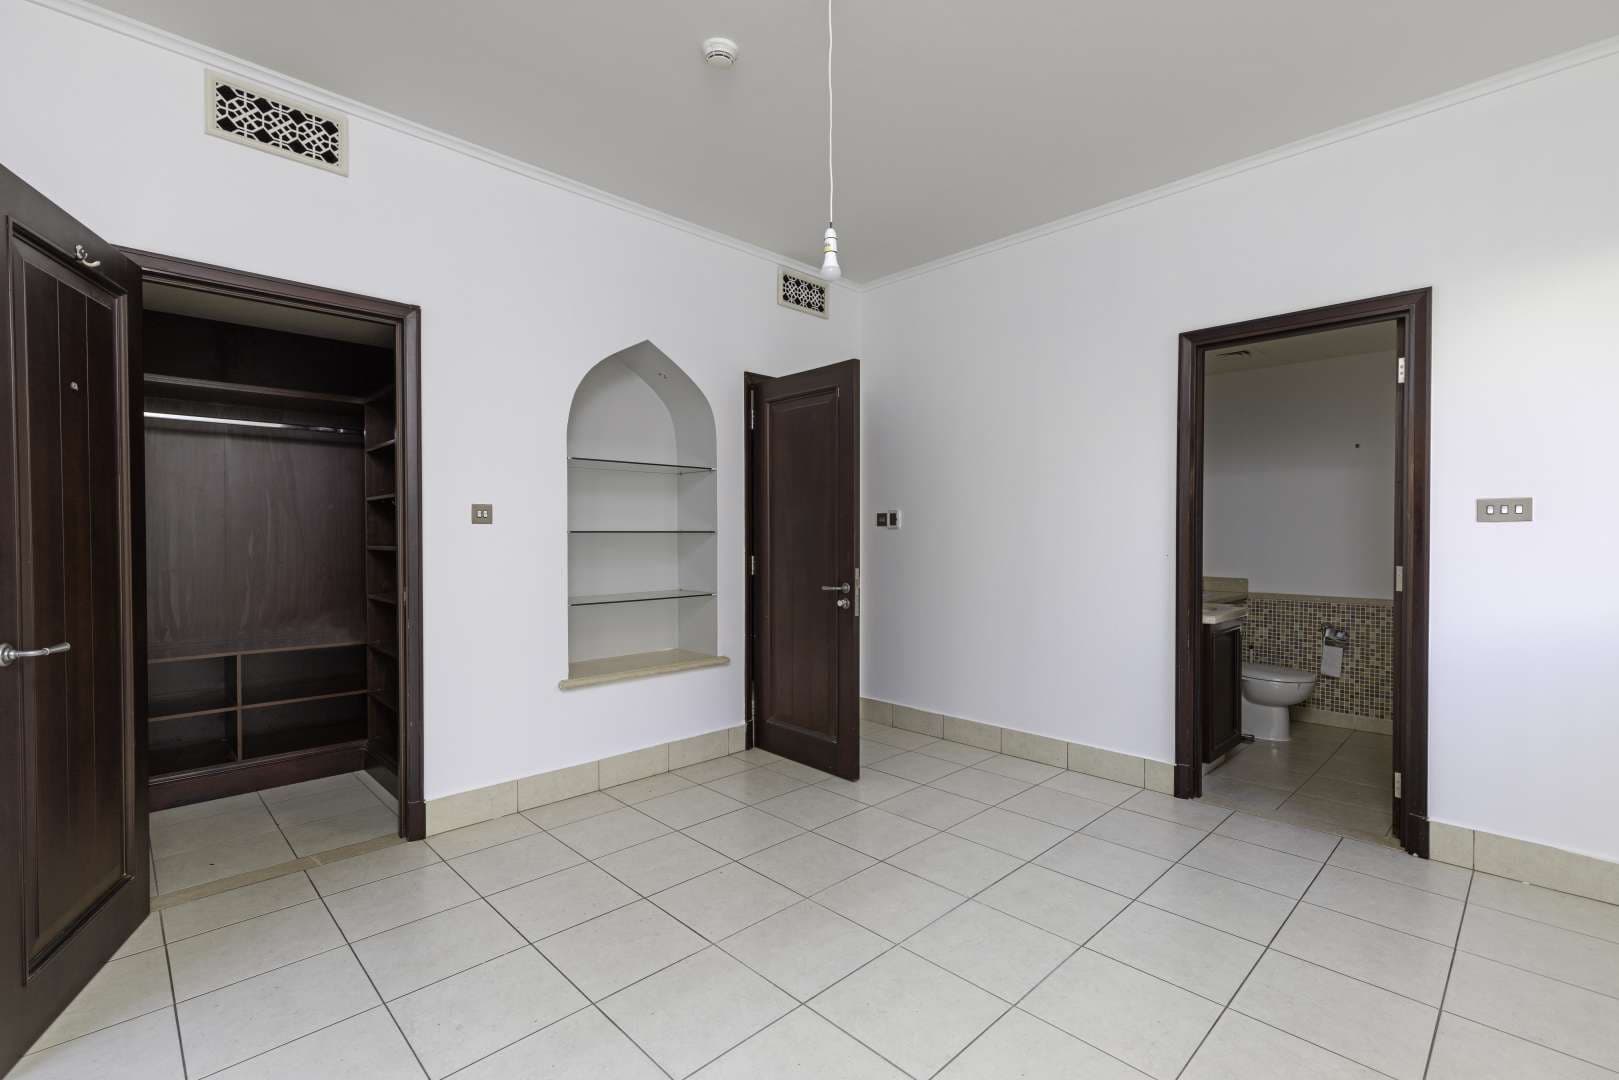 2 Bedroom Apartment For Rent Reehan Lp09988 18d001771455bc00.jpg